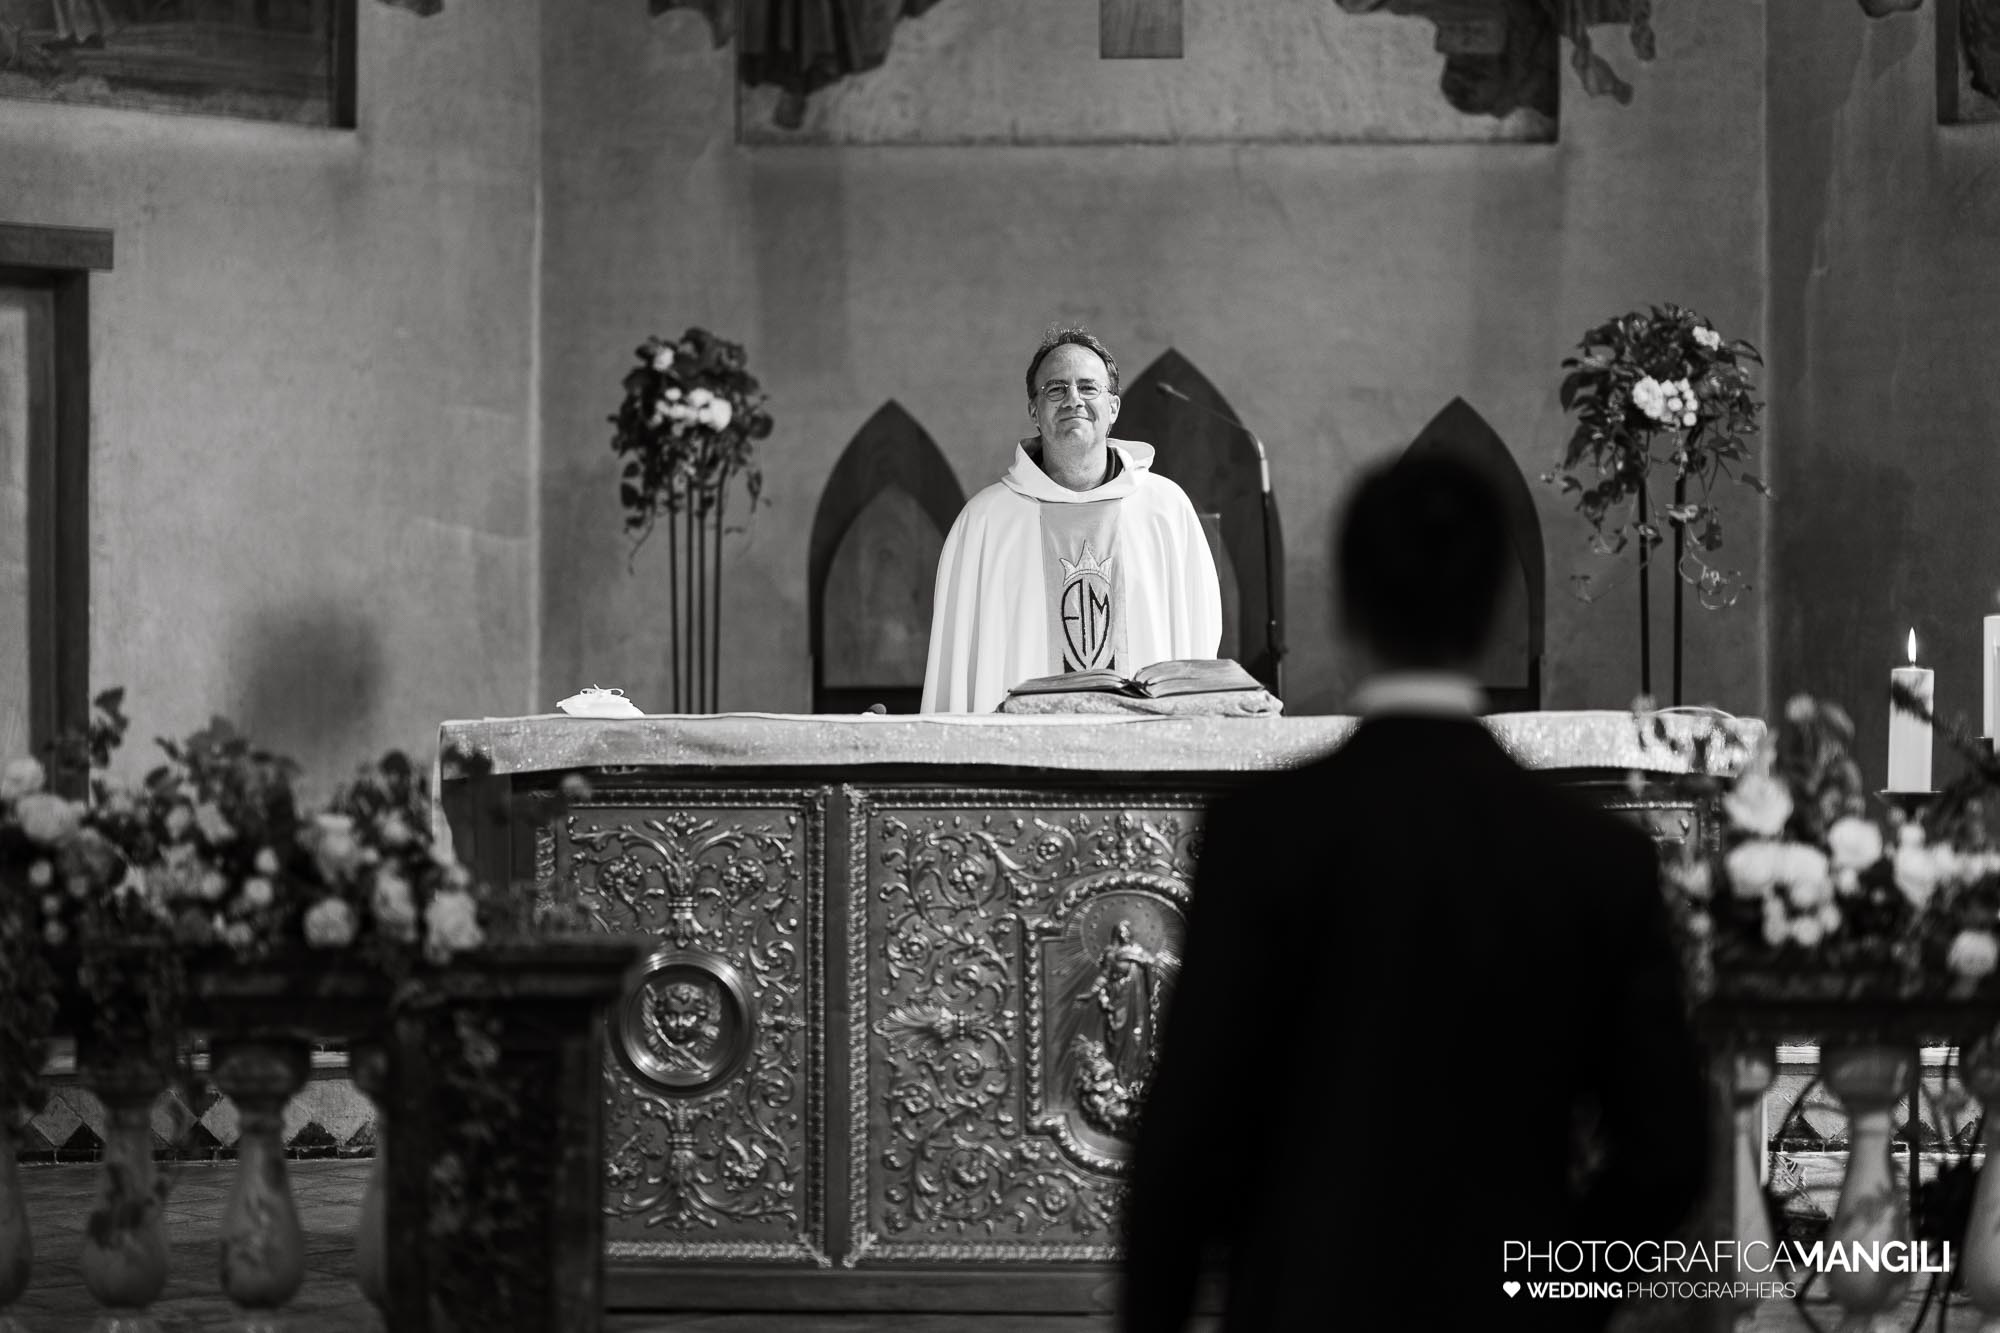 023 foto nozze wedding reportage ingresso sposo rito religioso chiesa milano chiara oliviero